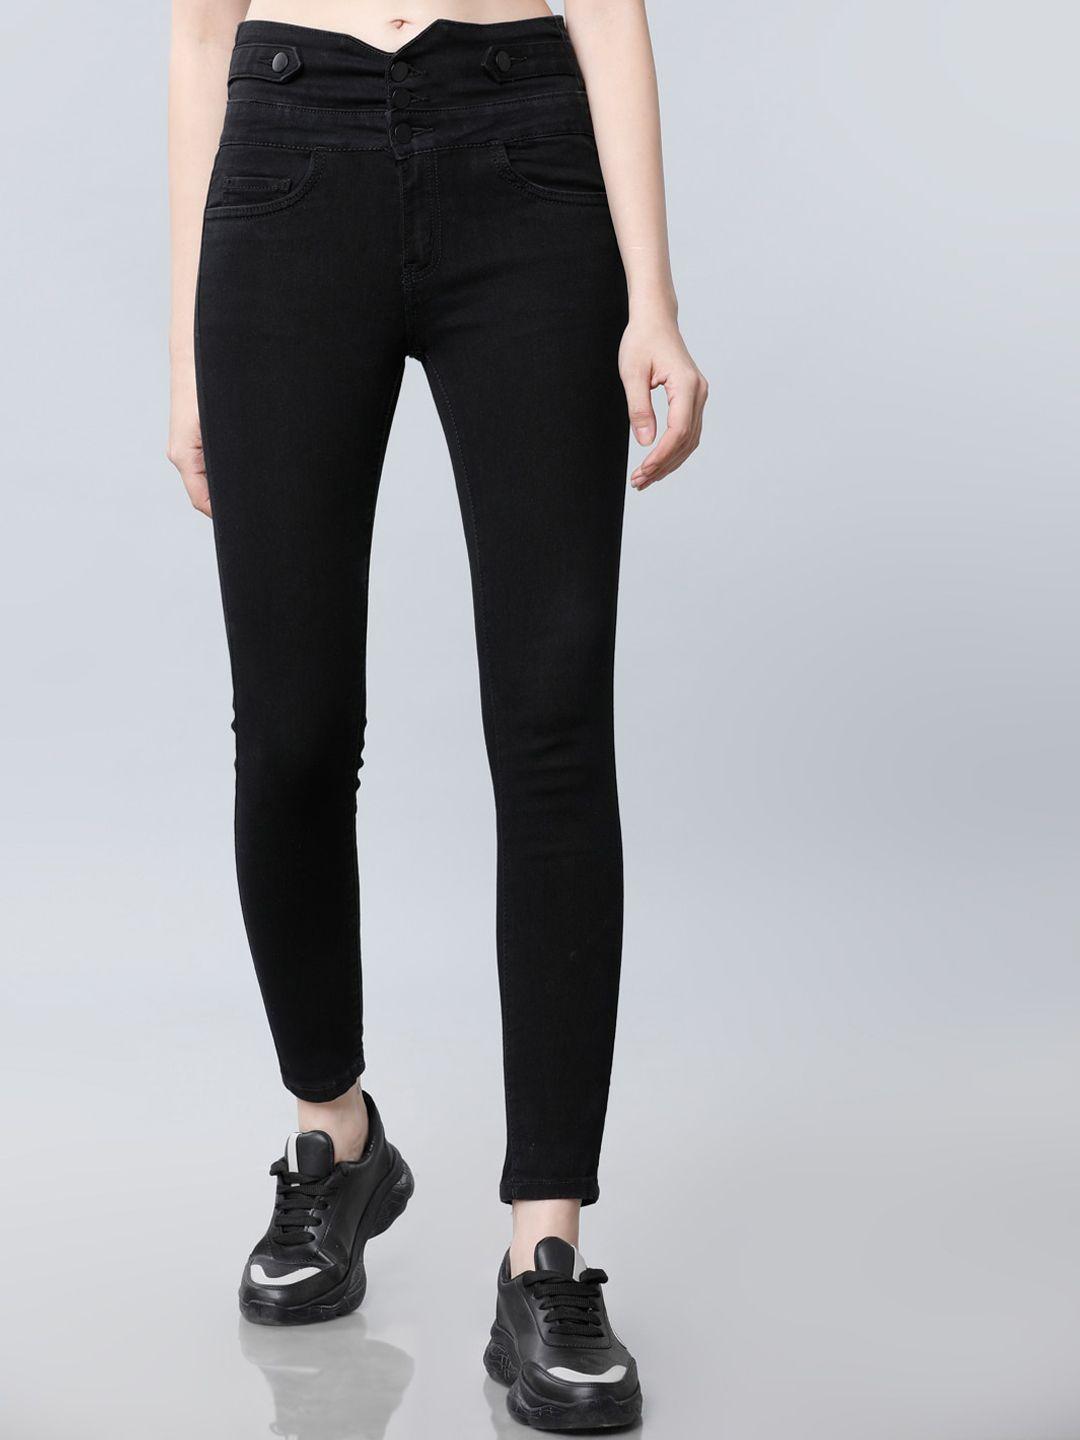 tokyo-talkies-women-black-regular-fit-high-rise-clean-look-stretchable-jeans